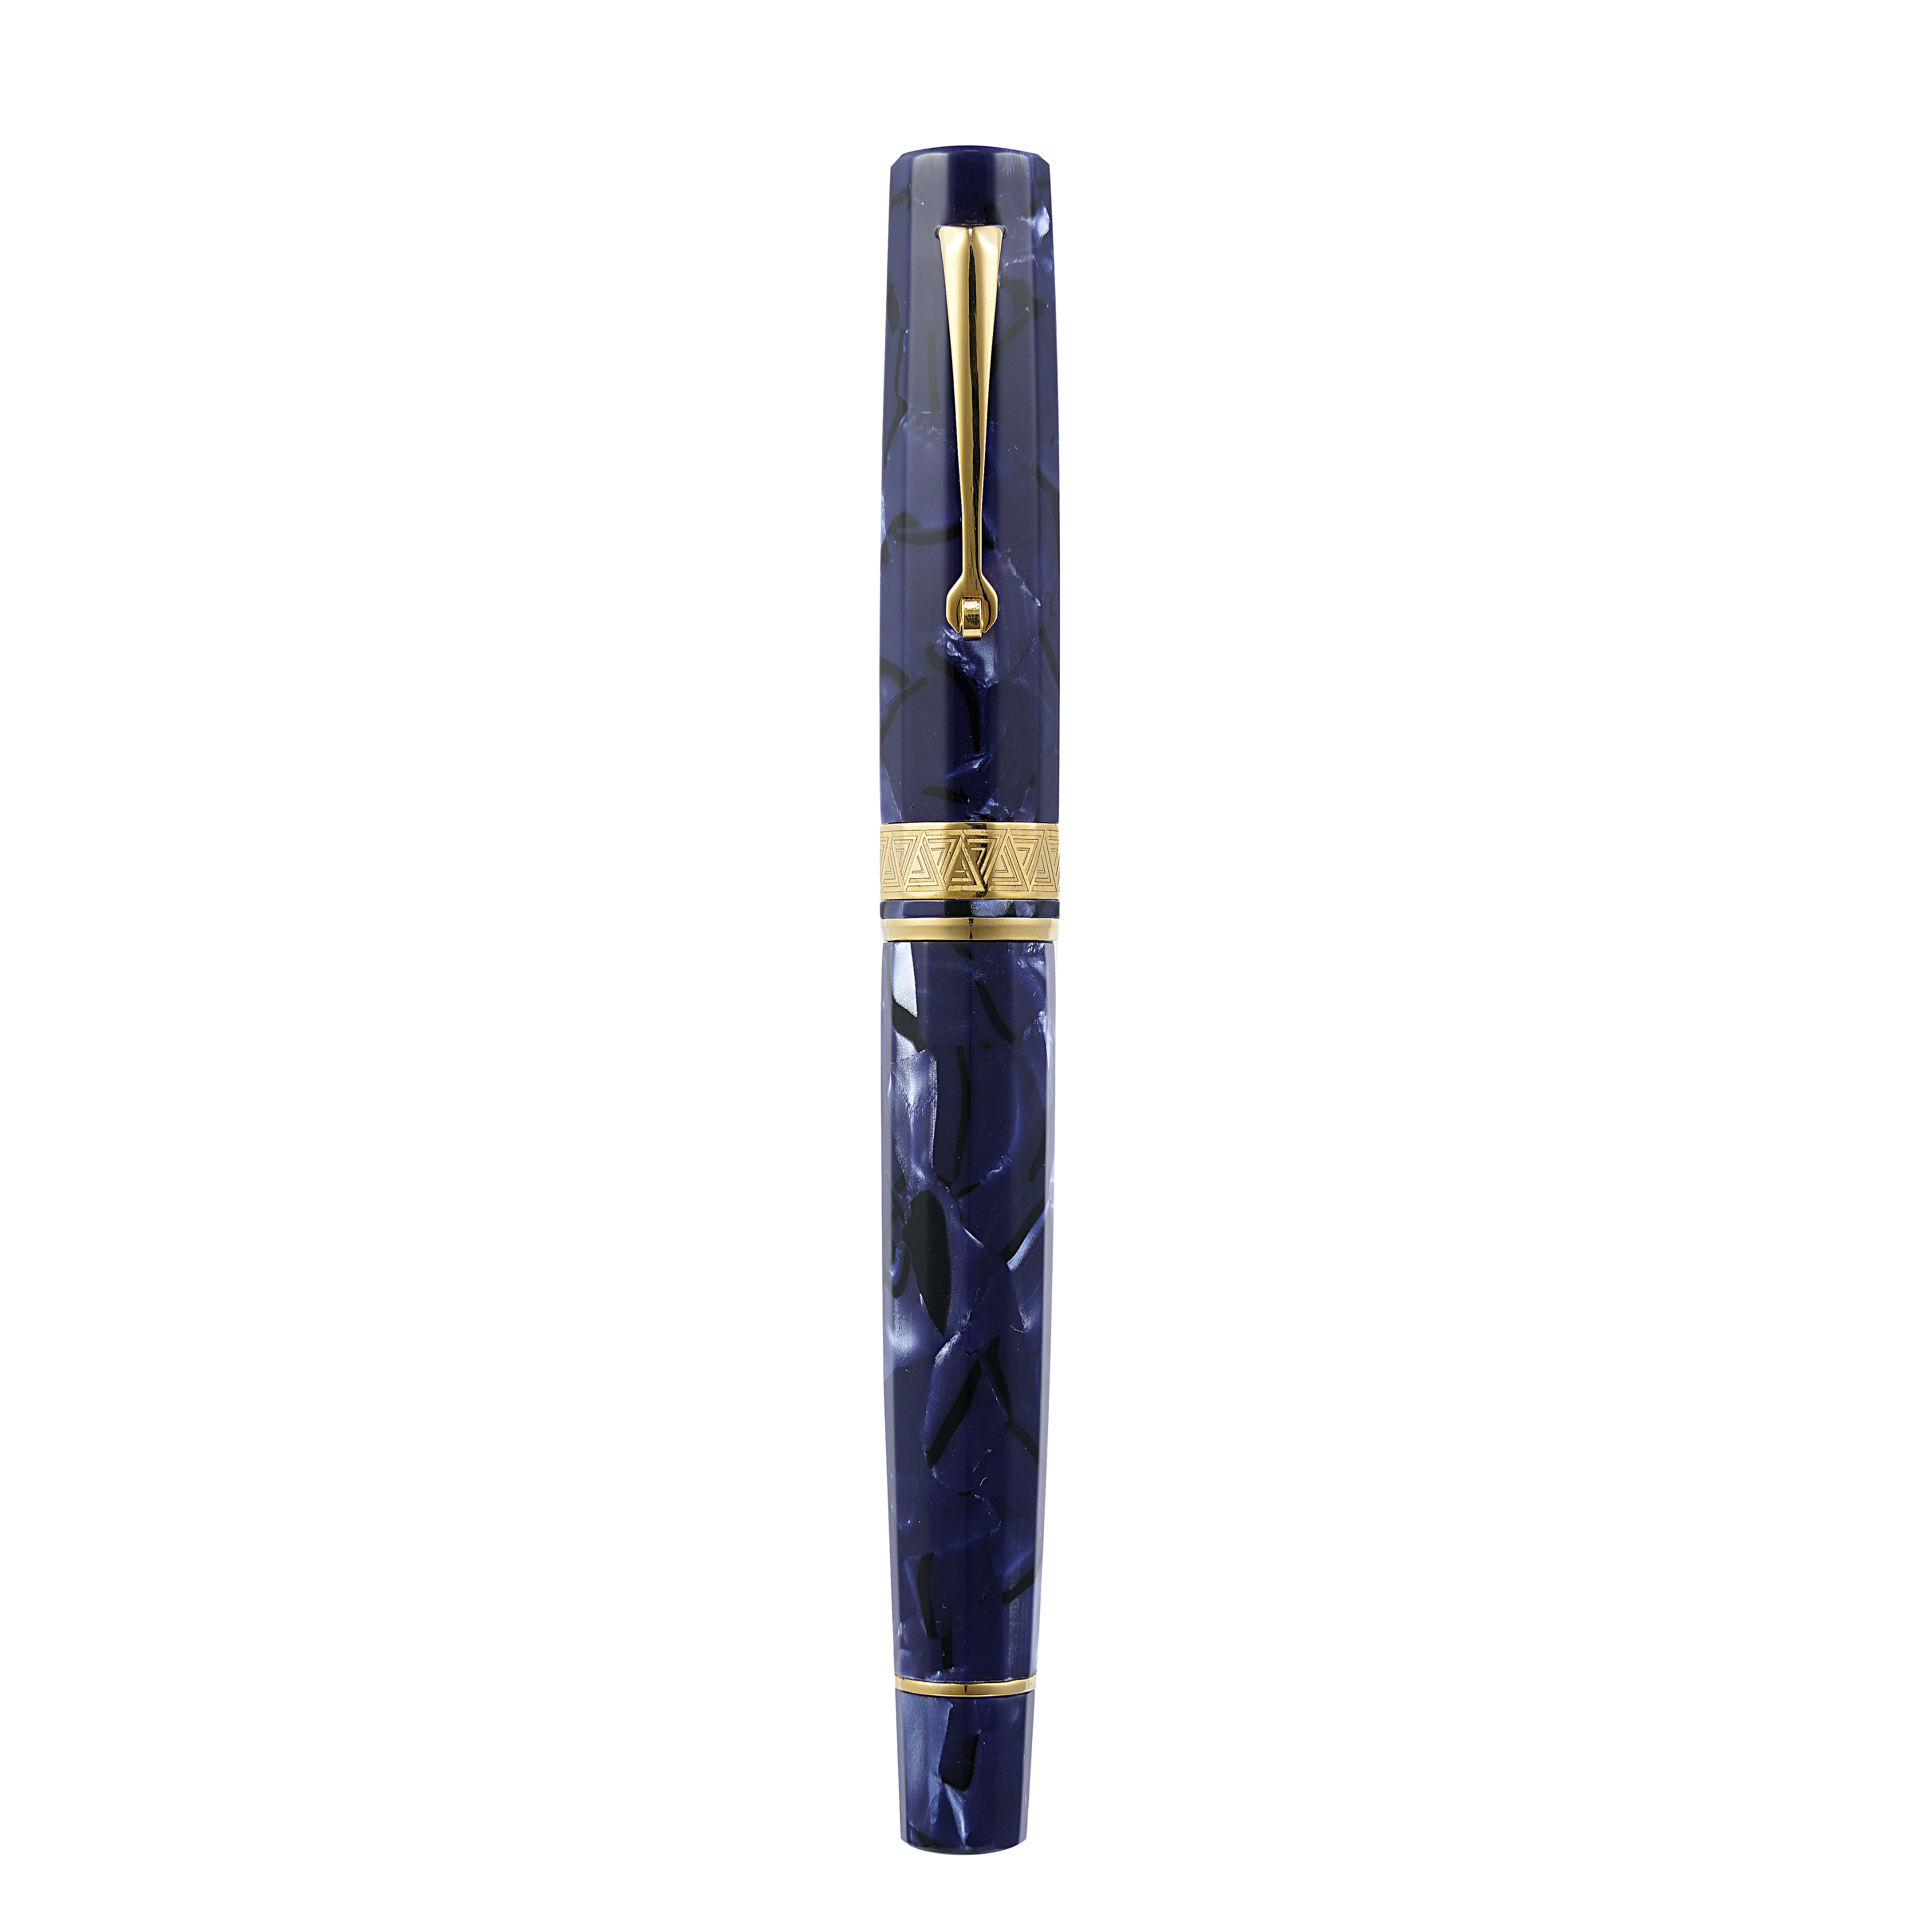 Penna stilografica OMAS Paragon in blu royale con finiture dorate